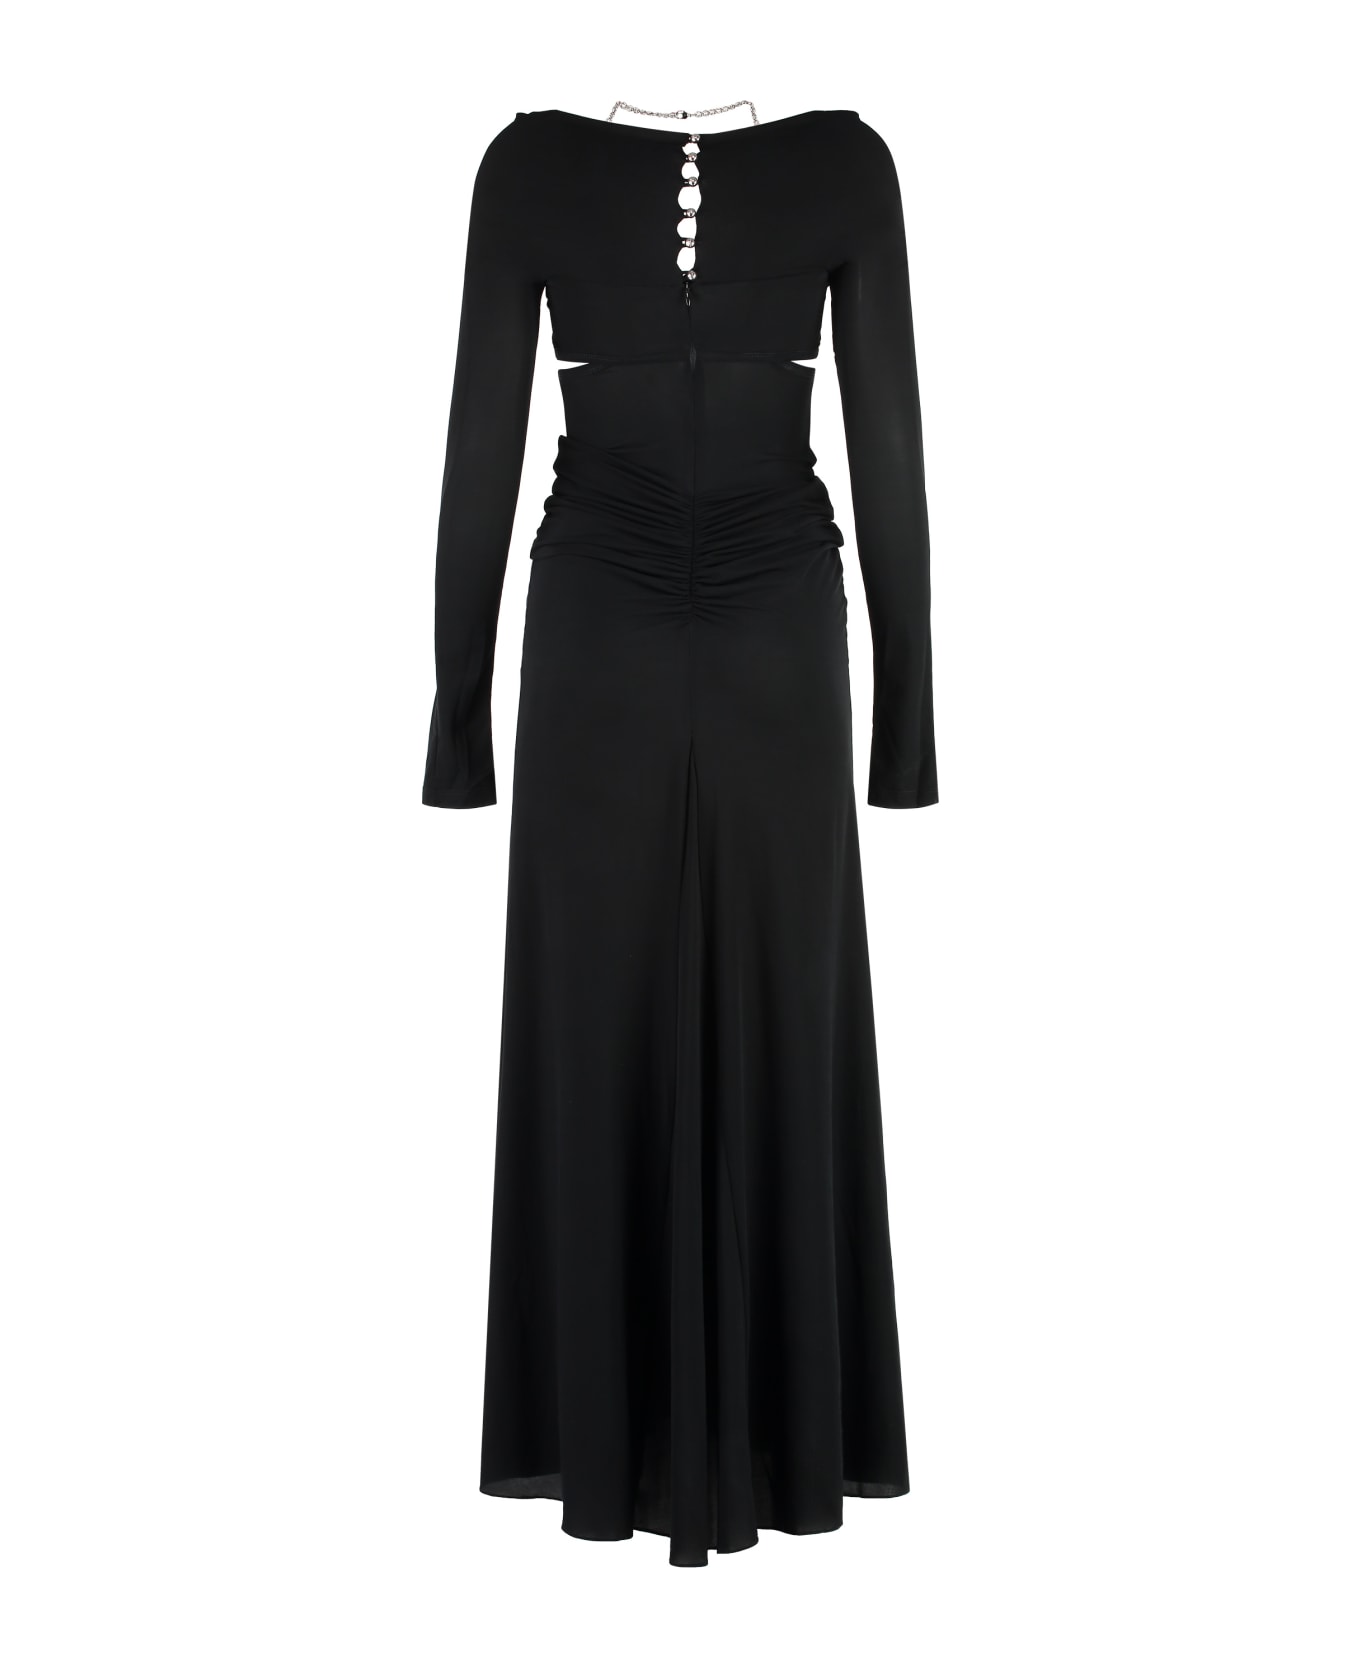 Paco Rabanne Draped Jersey Dress - black